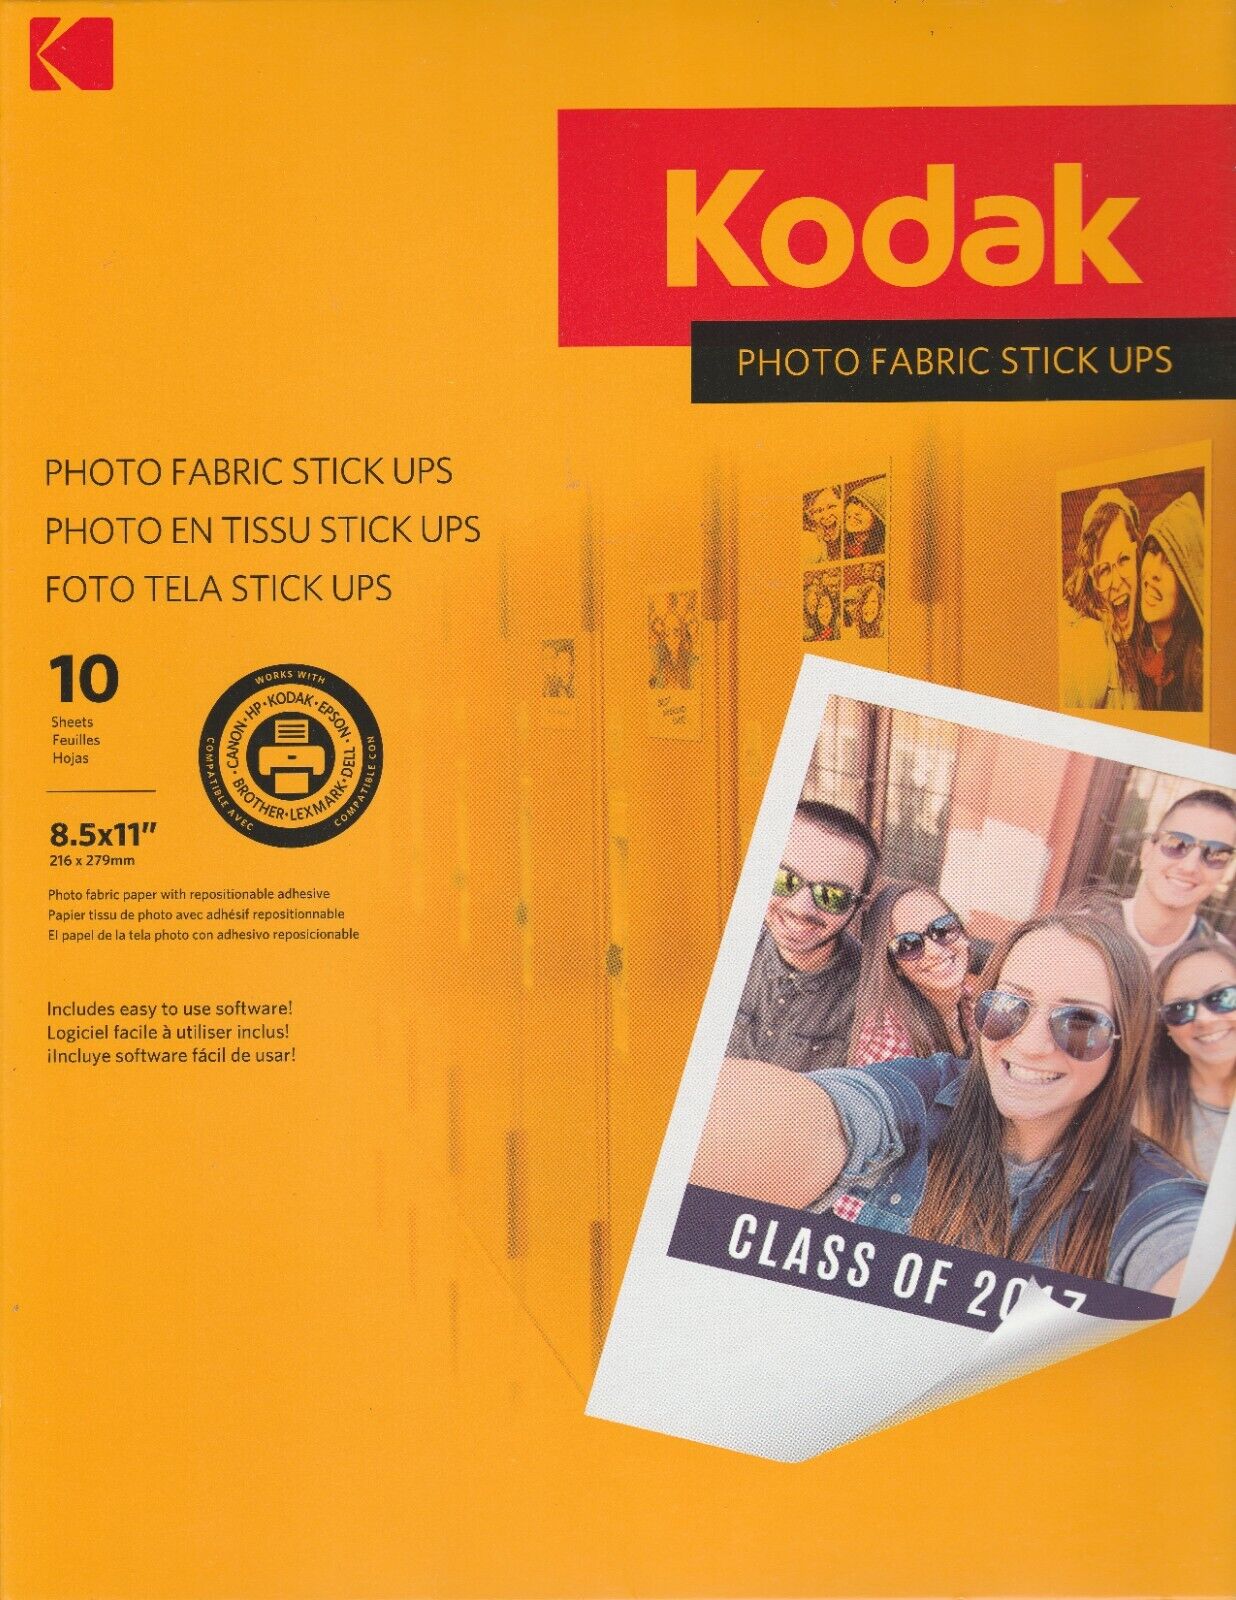 KODAK Photo Fabric Paper Stick Ups Repositionable Adhesive Inkjet Print 8.5x11